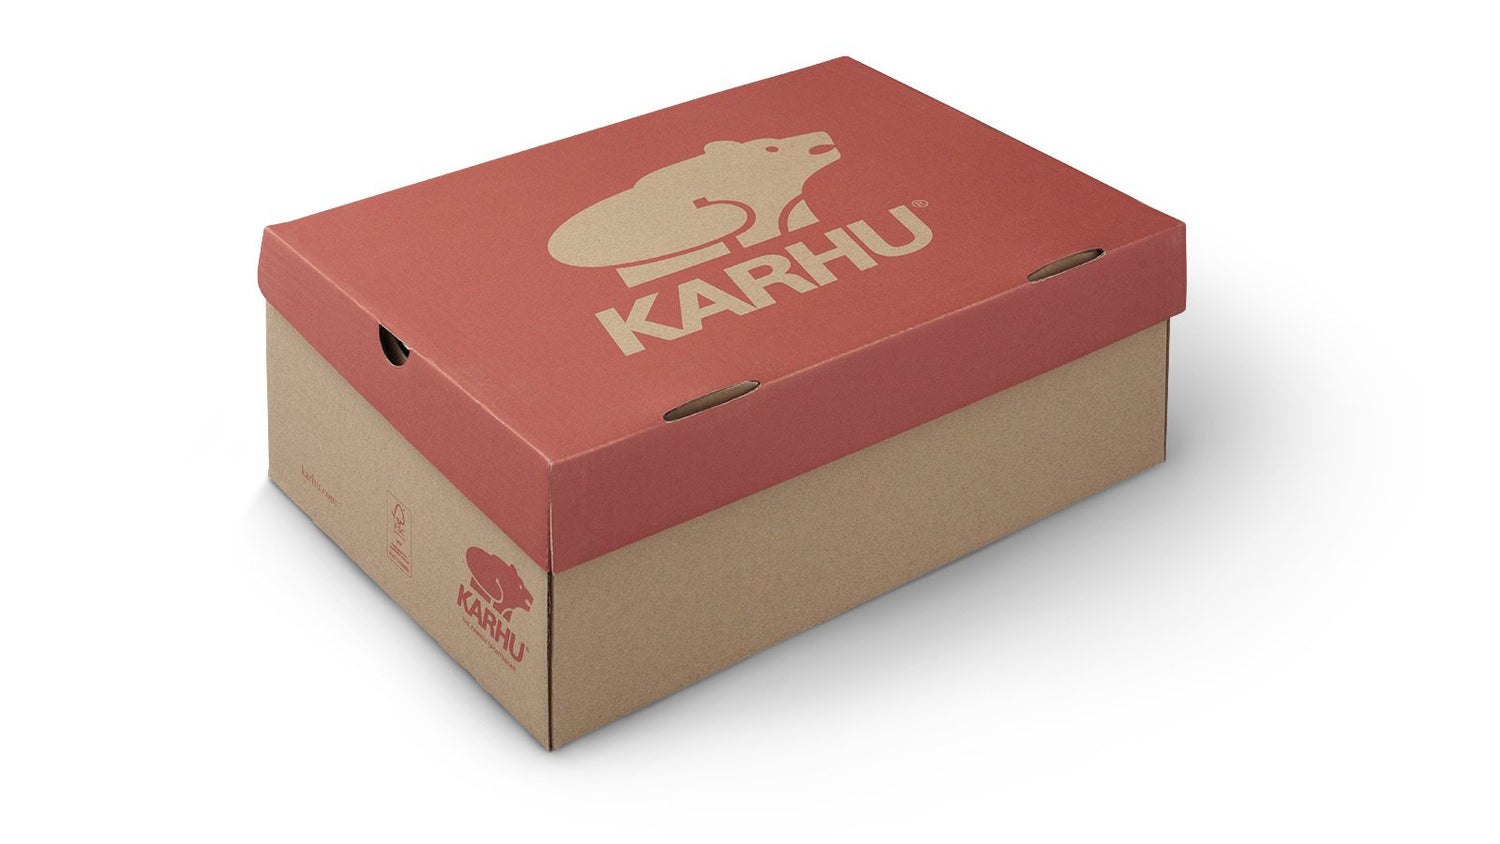 Karhu Synchron Classic shoebox F802675